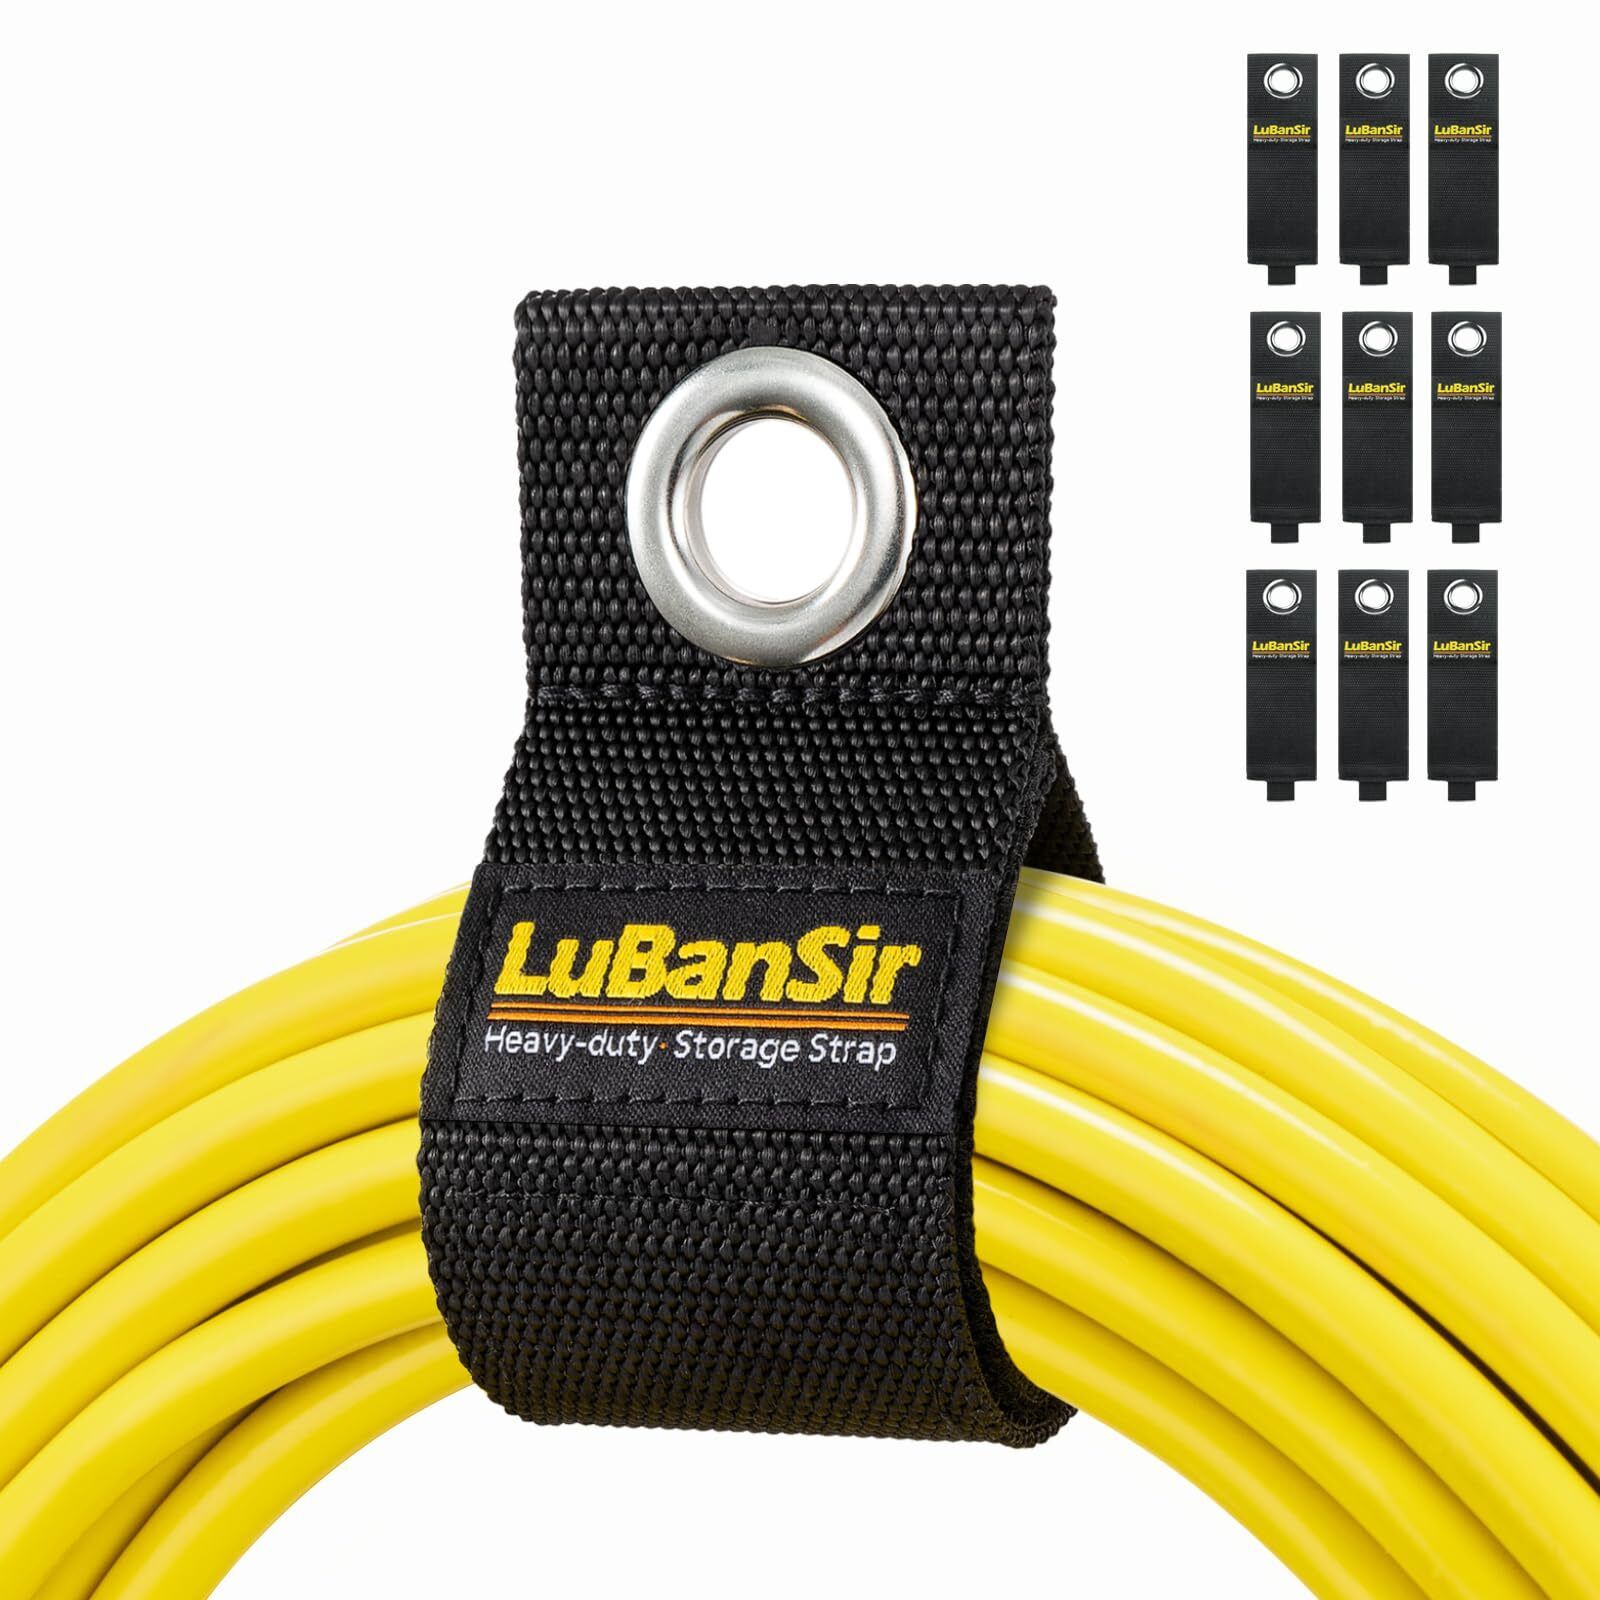 LuBanSir 9 Pack Extension Cord Holder Organizer, 13-inch Heavy Duty Storage S...